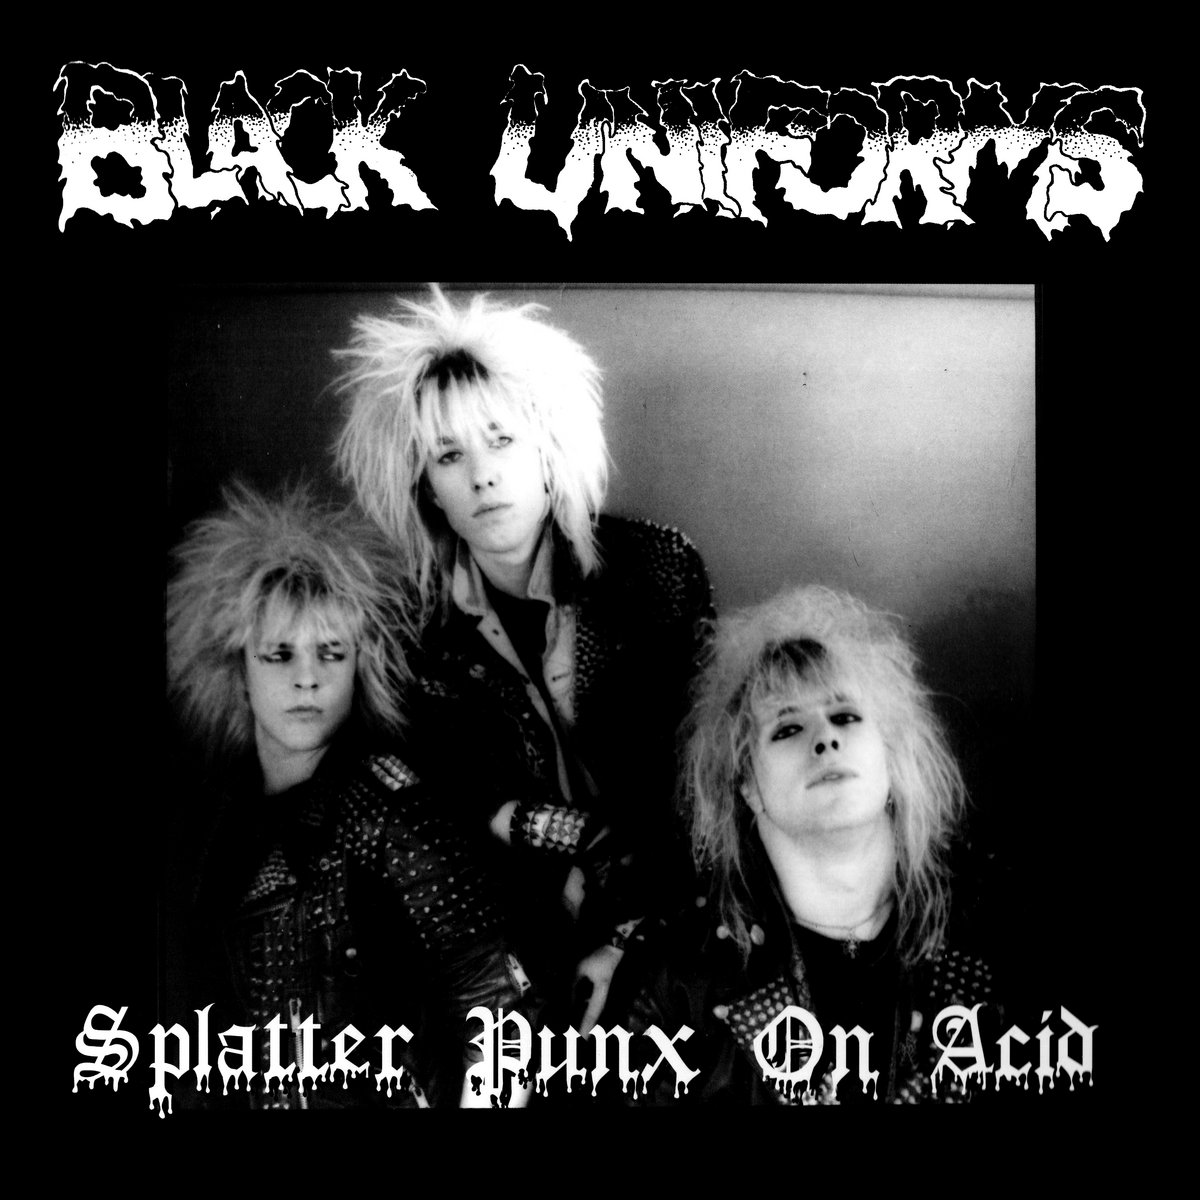 ALBUM REVIEW: Splatter Punx On Acid (reissue) - Black Uniforms 